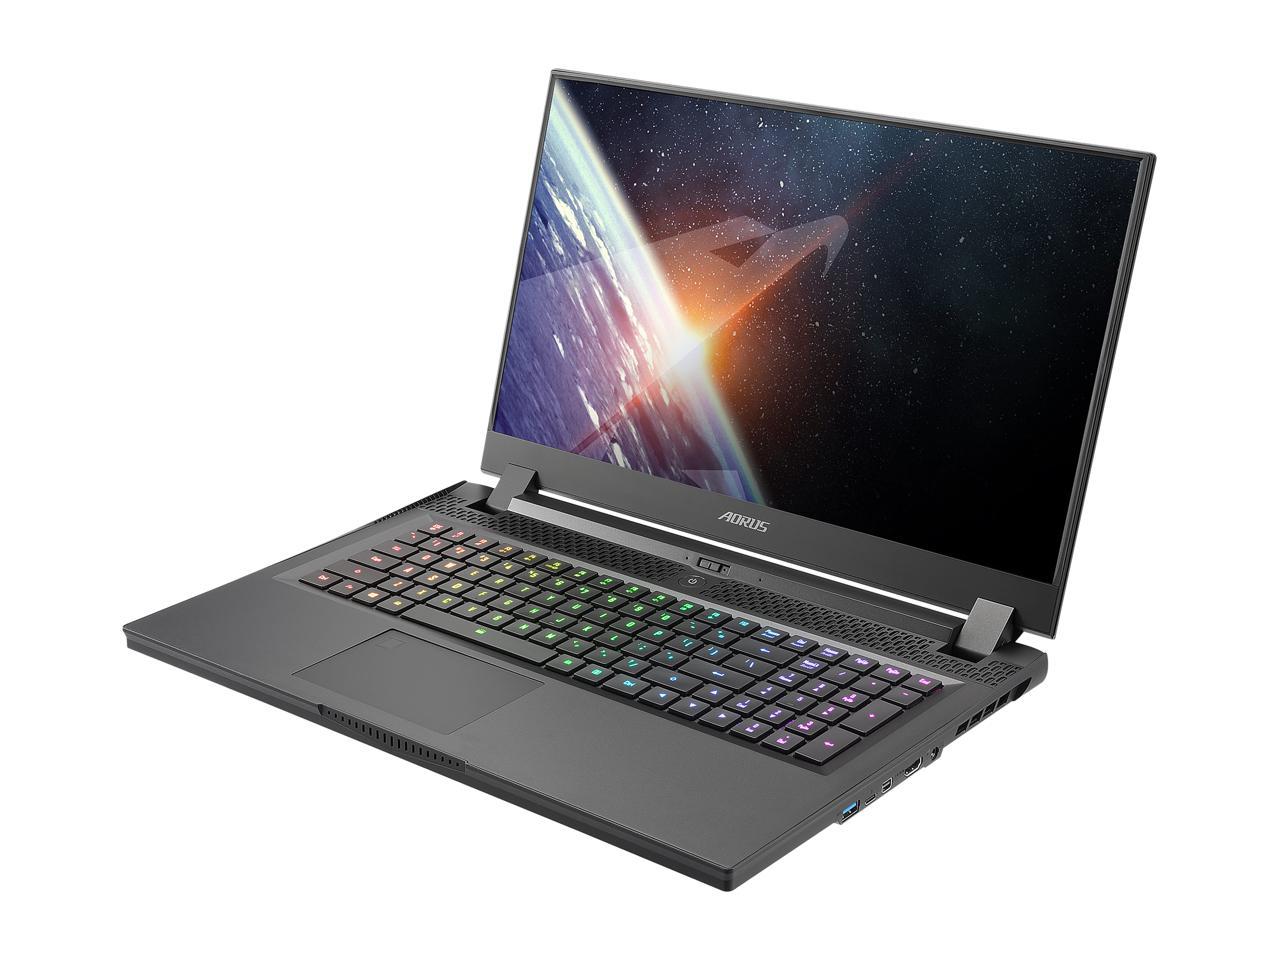 GIGABYTE AORUS 17G YD Gaming Laptop [RTX 3080, Intel 11th Gen CPU, 17.3" FHD IPS 300Hz] - $1699 after MIR